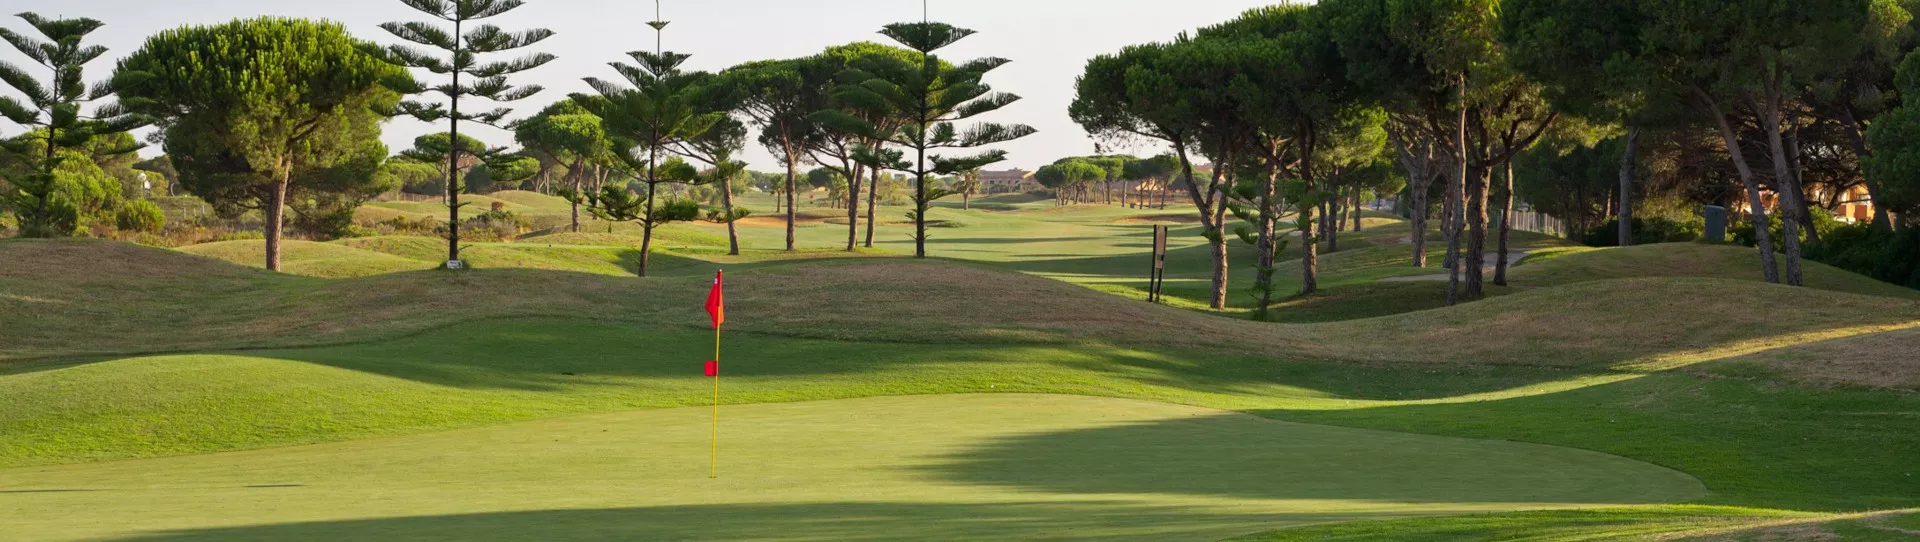 Spain golf courses - Sancti Petri Hills Golf - Photo 2